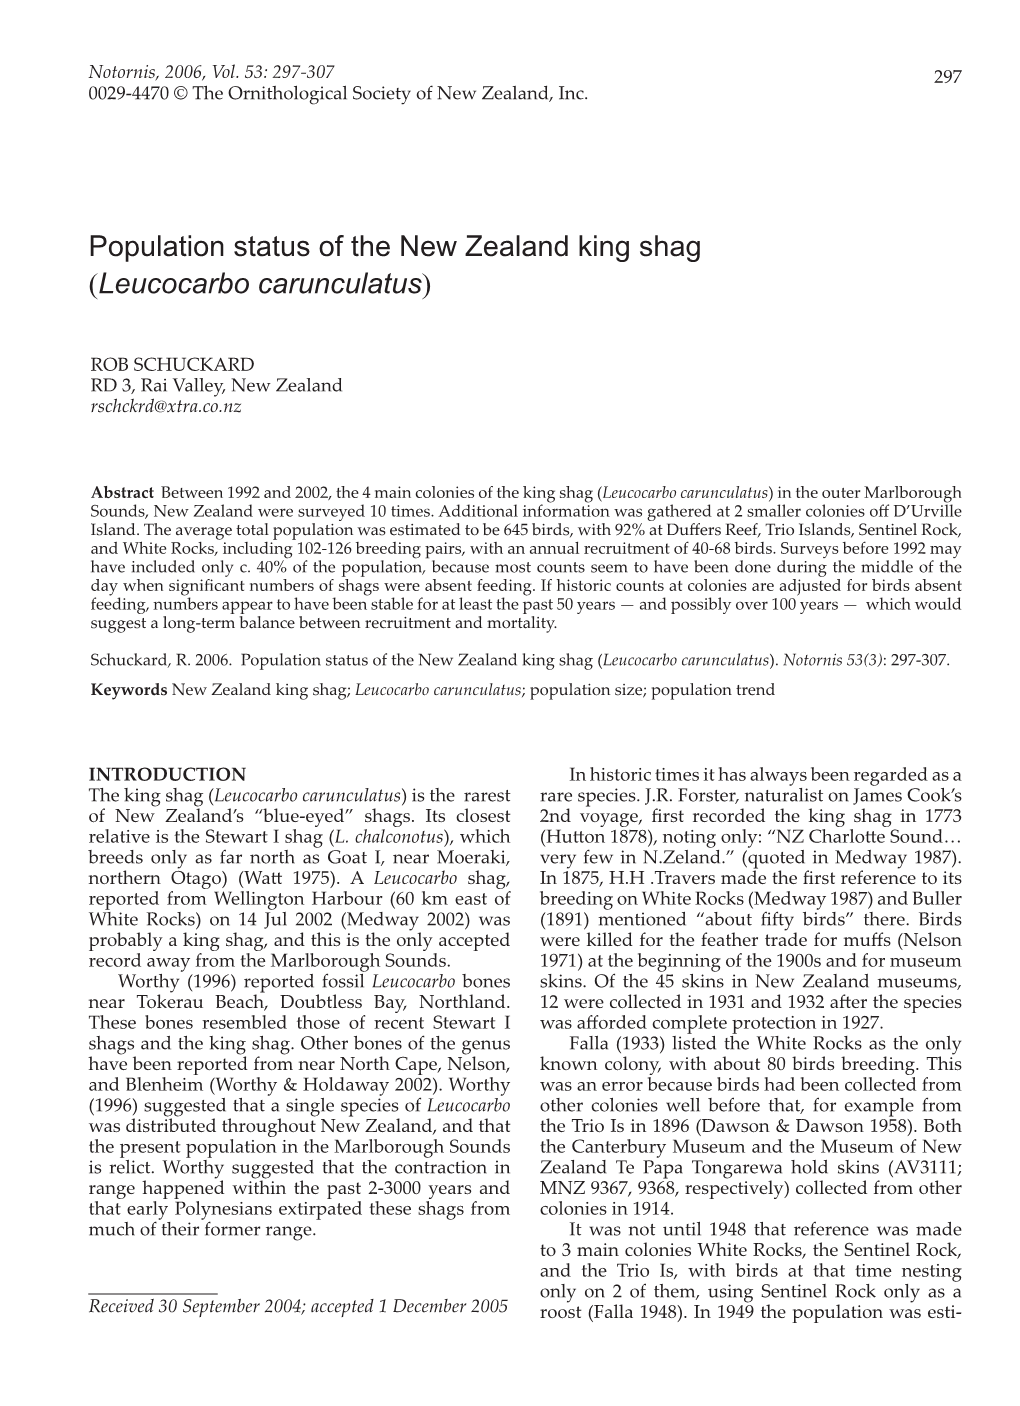 Population Status of the New Zealand King Shag (Leucocarbo Carunculatus)